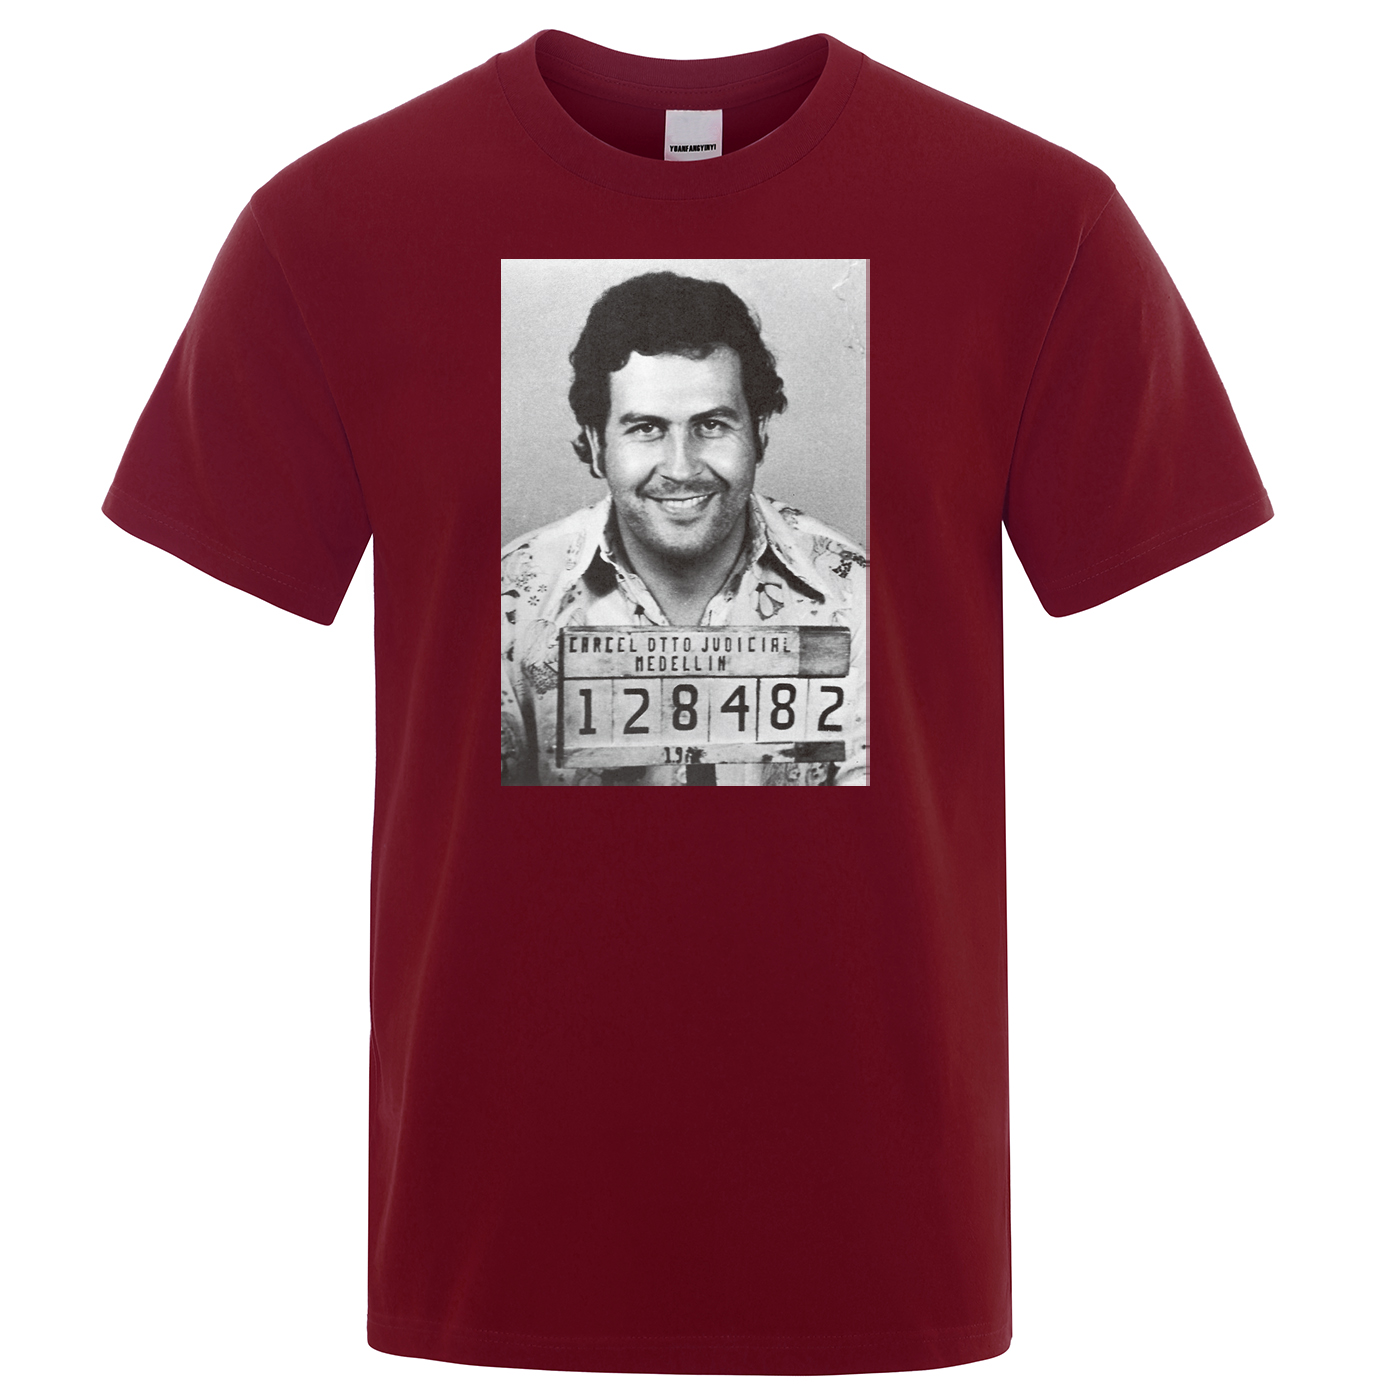 Pablo Escobar Male T-Shirt Colombian Drug Lord Men Tshirts High Quality Cotton T Shirt Funny Streetwear Casual Top Man Tee Shirt